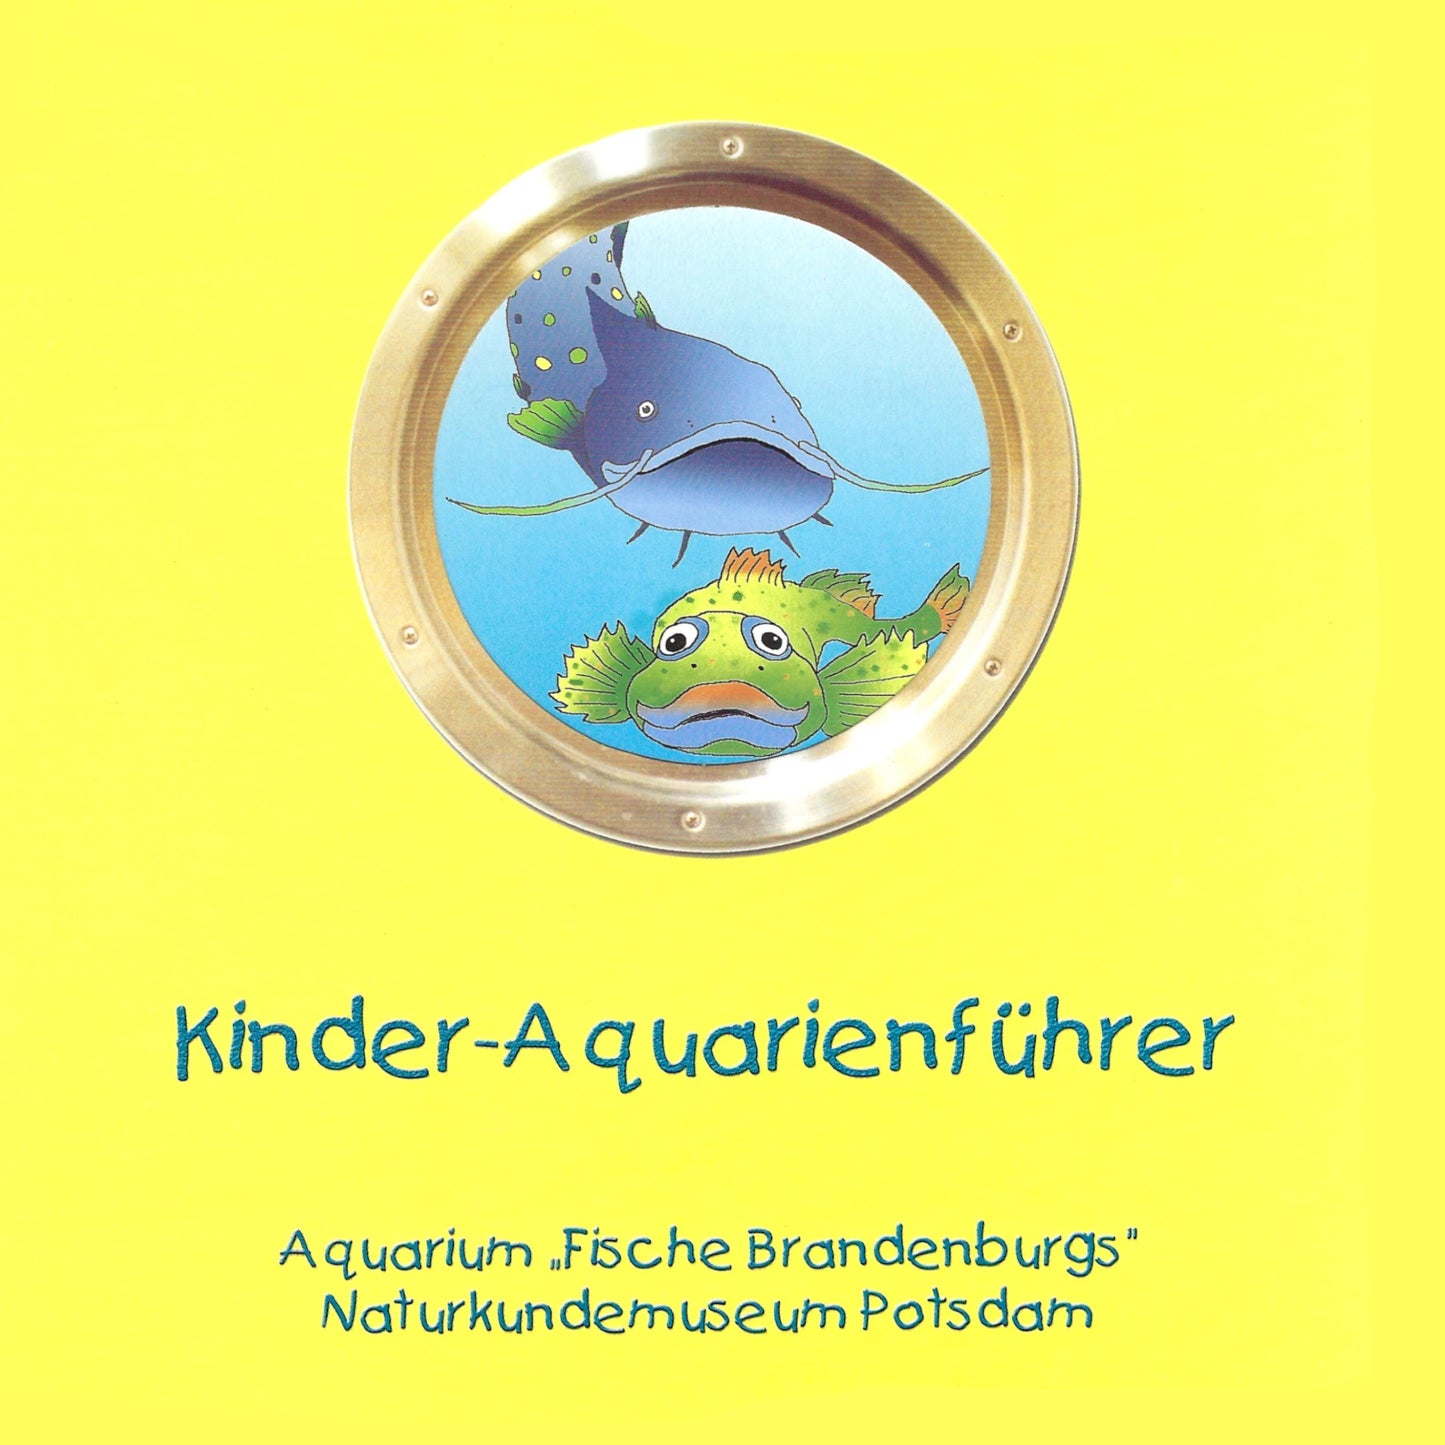 Kinder-Aquarienführer Aquarium "Fische Brandenburgs"